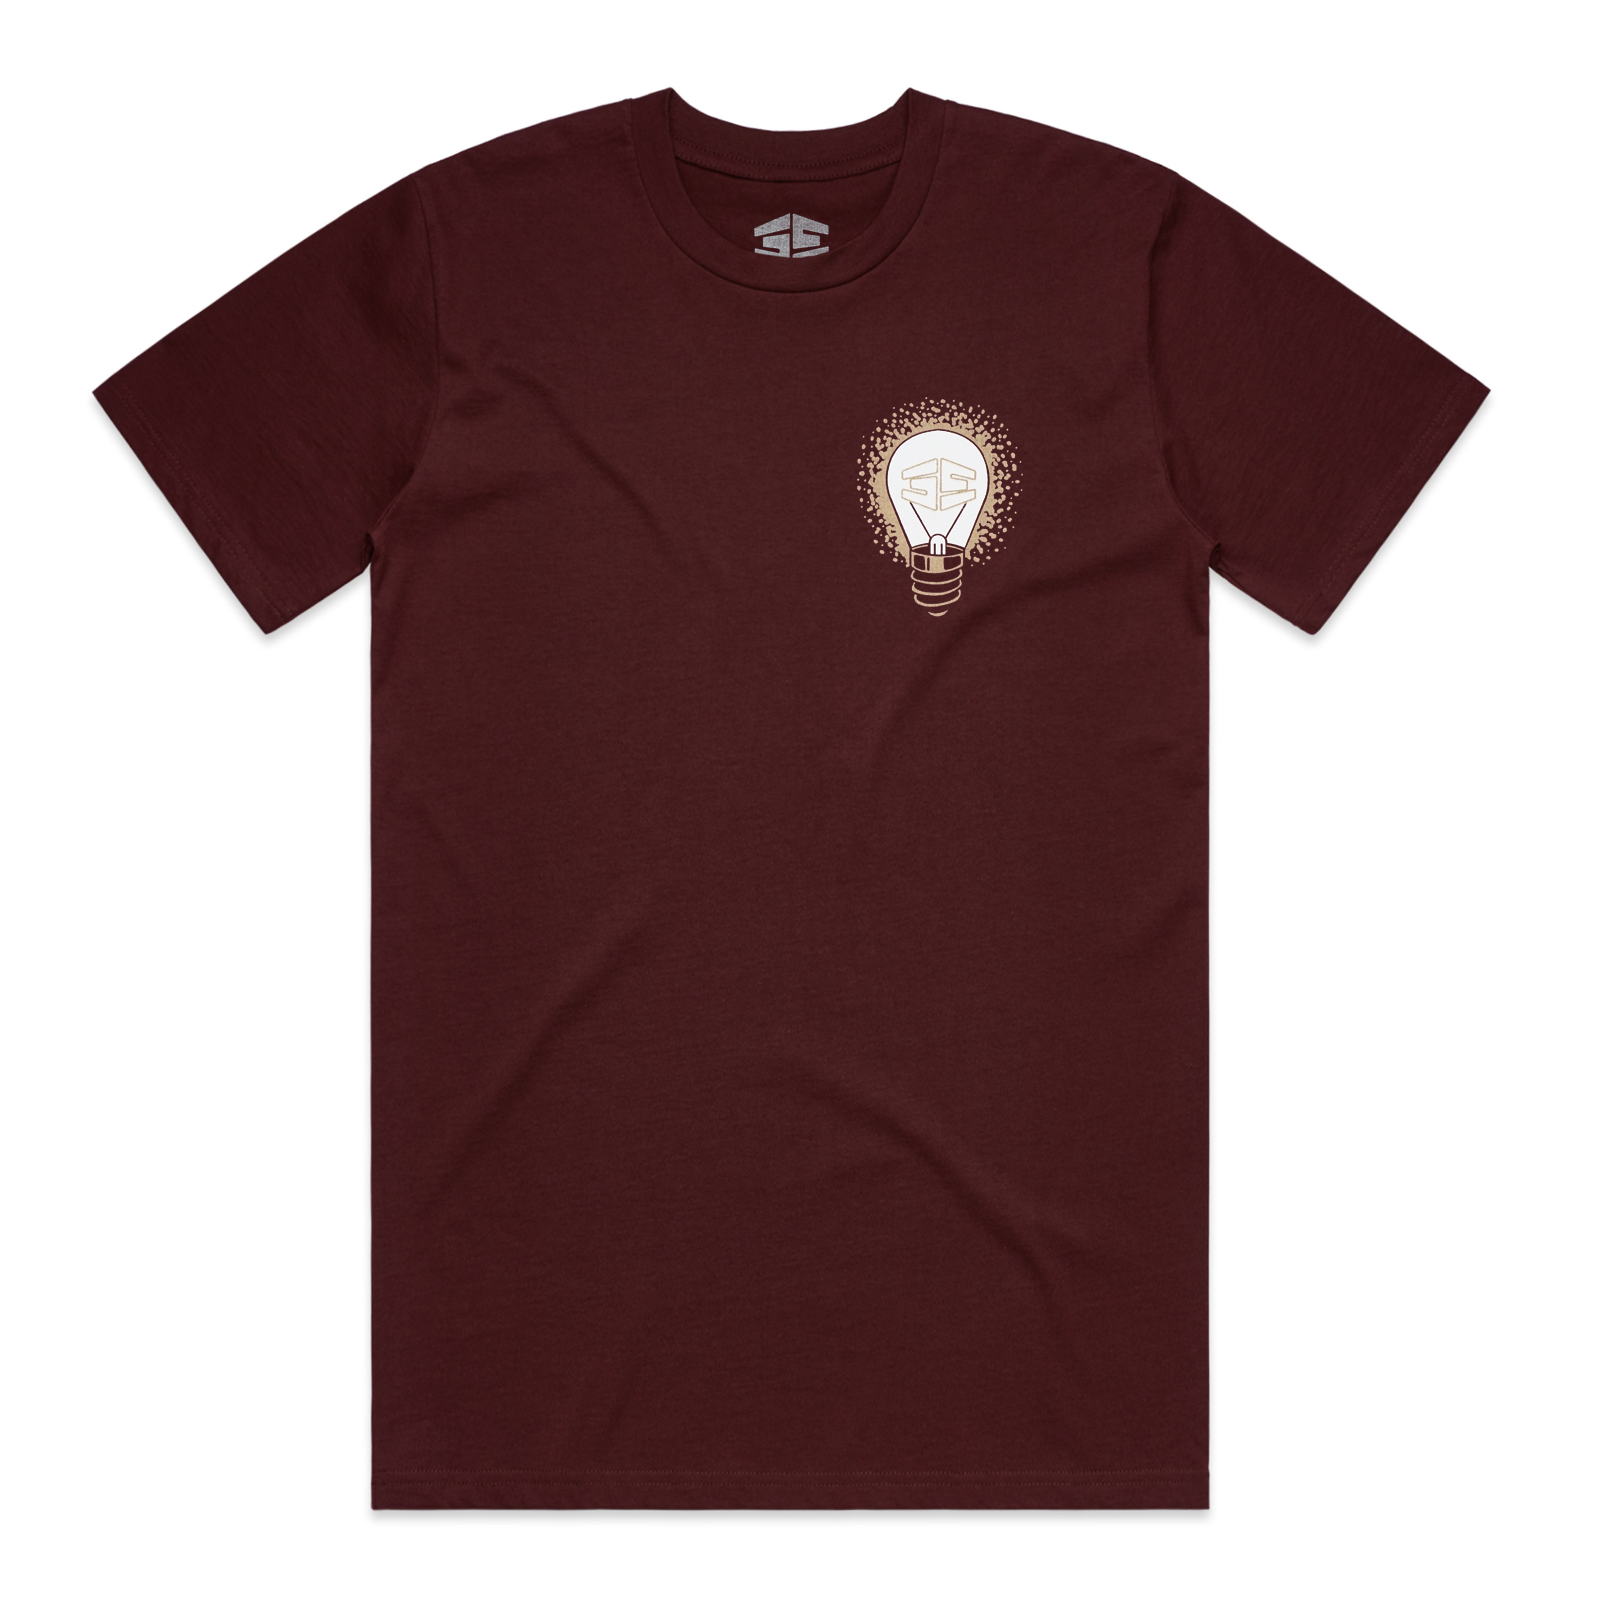 35th North 'Bright Idea' T-Shirt - Burgundy